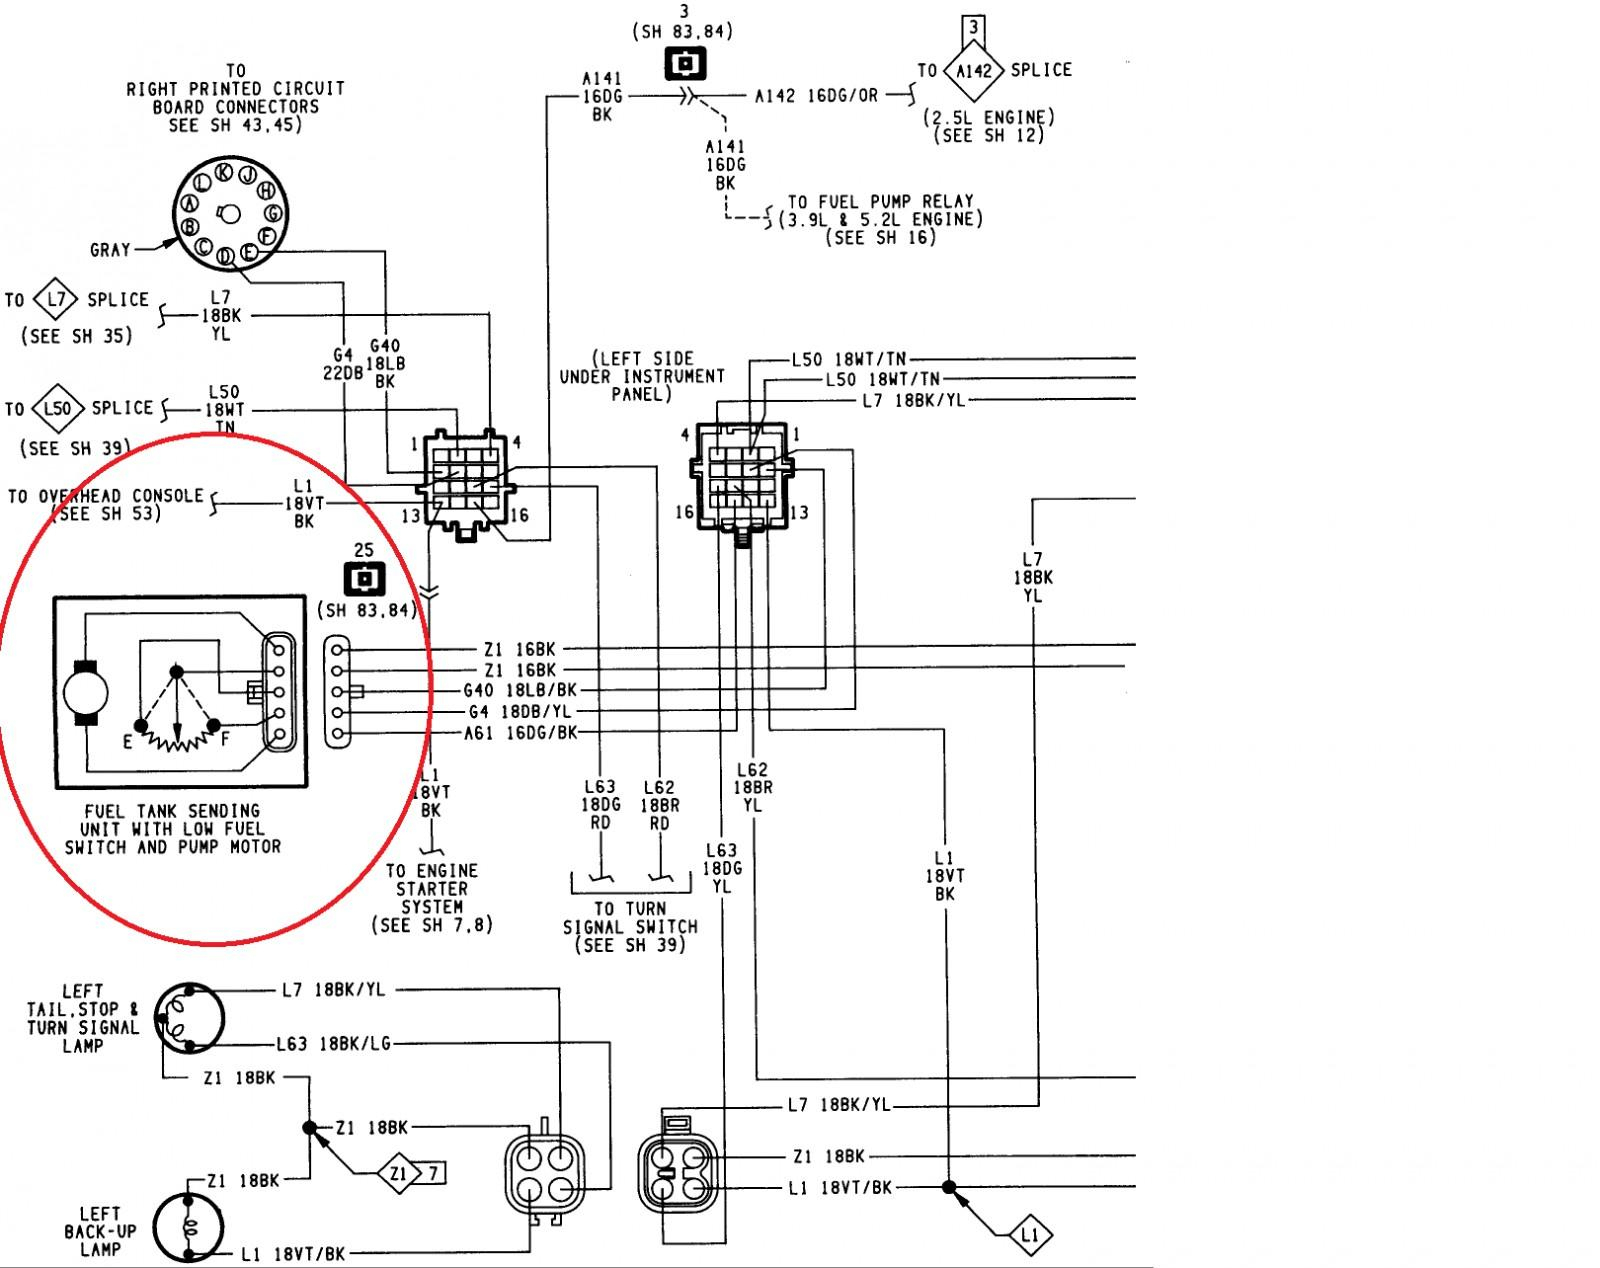 F70 Yamaha Trim Gauge Wiring - Trusted Wiring Diagram Online - Yamaha Outboard Gauges Wiring Diagram